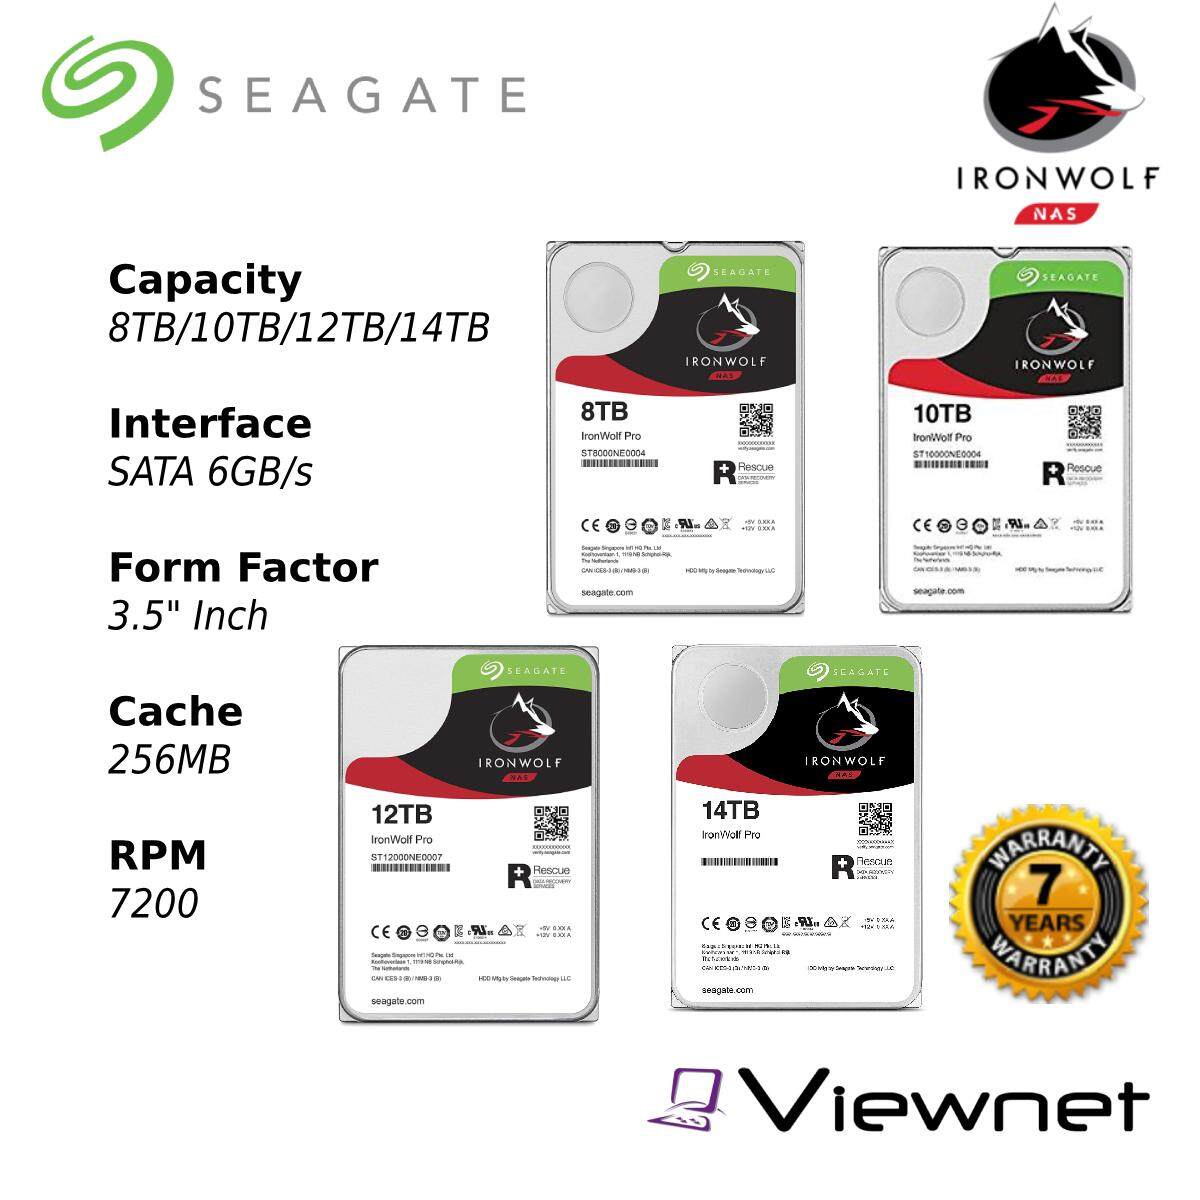 Seagate Ironwolf Pro 14TB Internal Hard Drive - 7200RPM SATA 6Gb/s 256MB 3.5